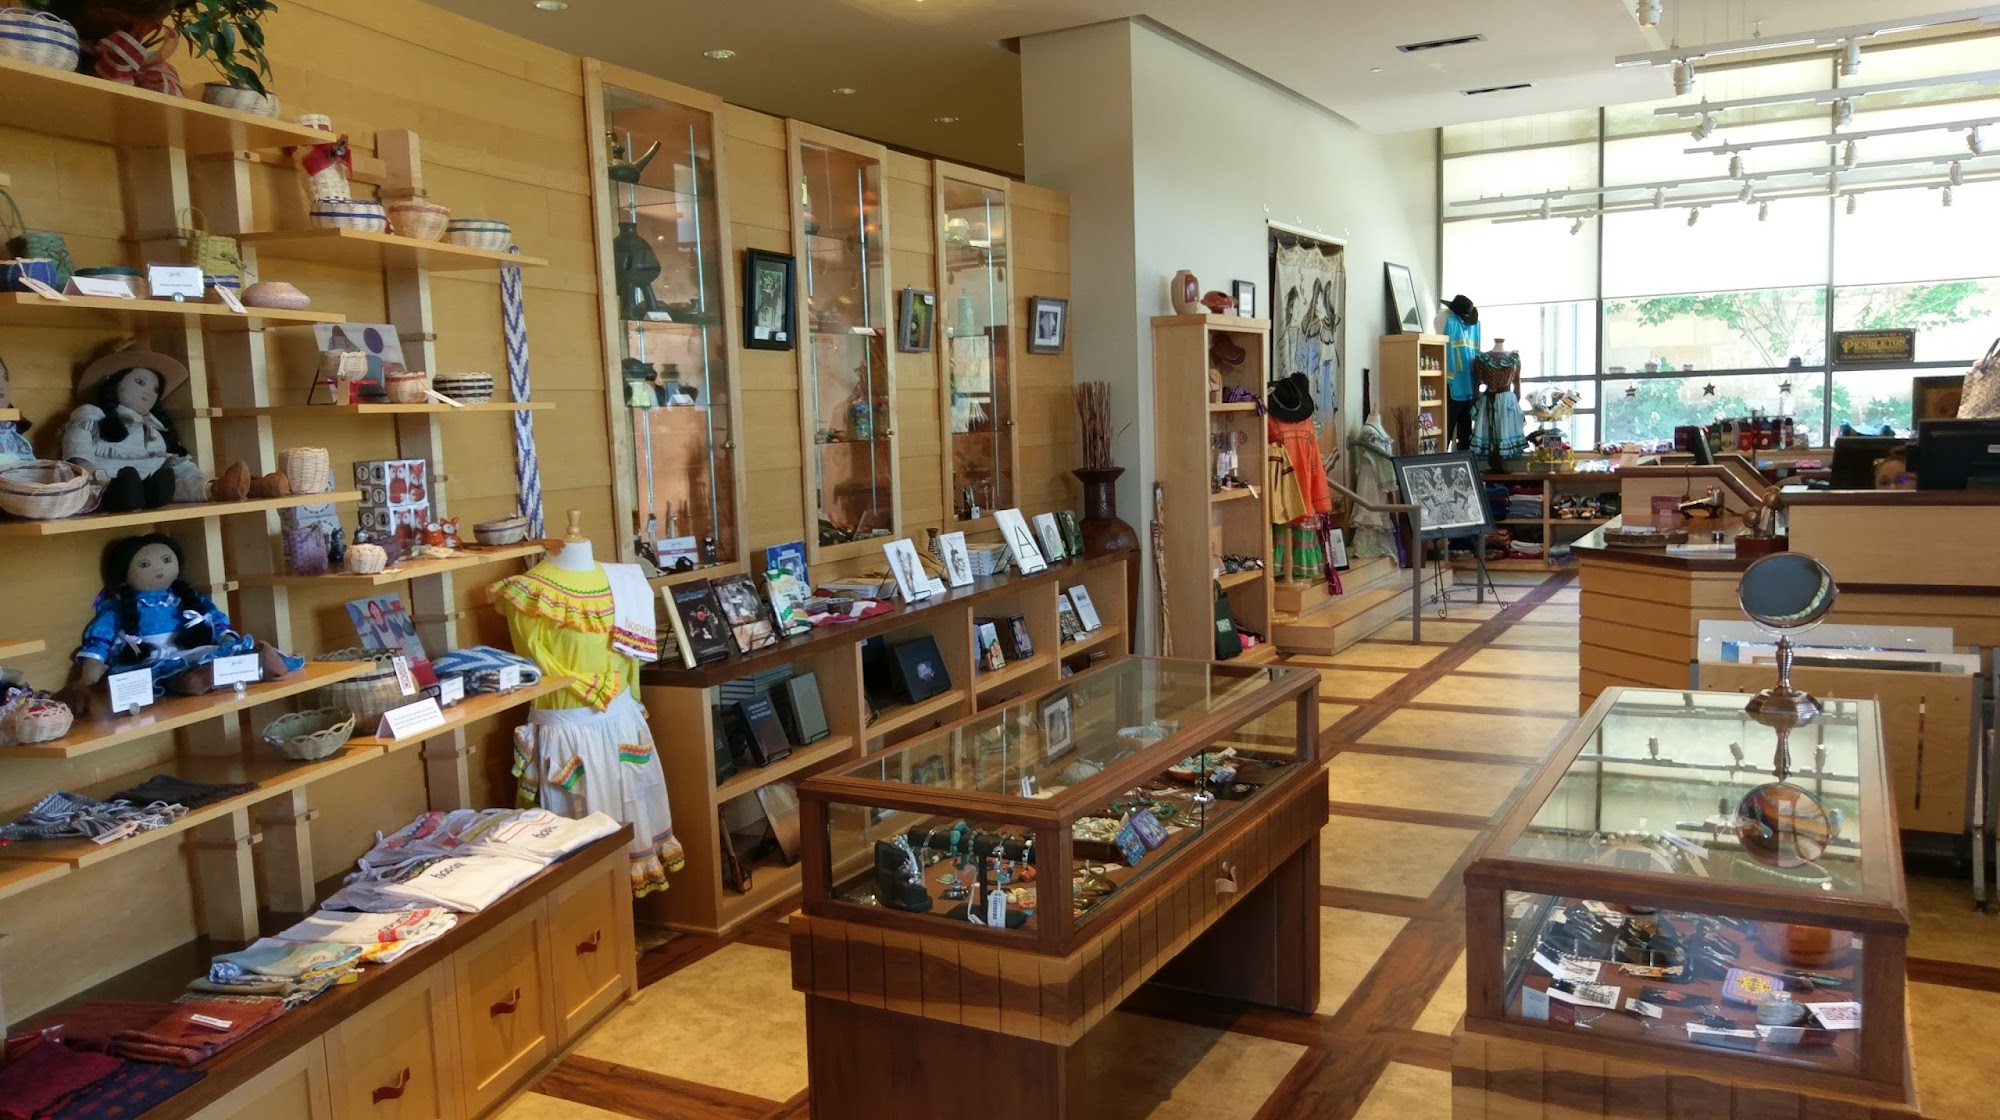 Aachompa' Gallery Gift Shop